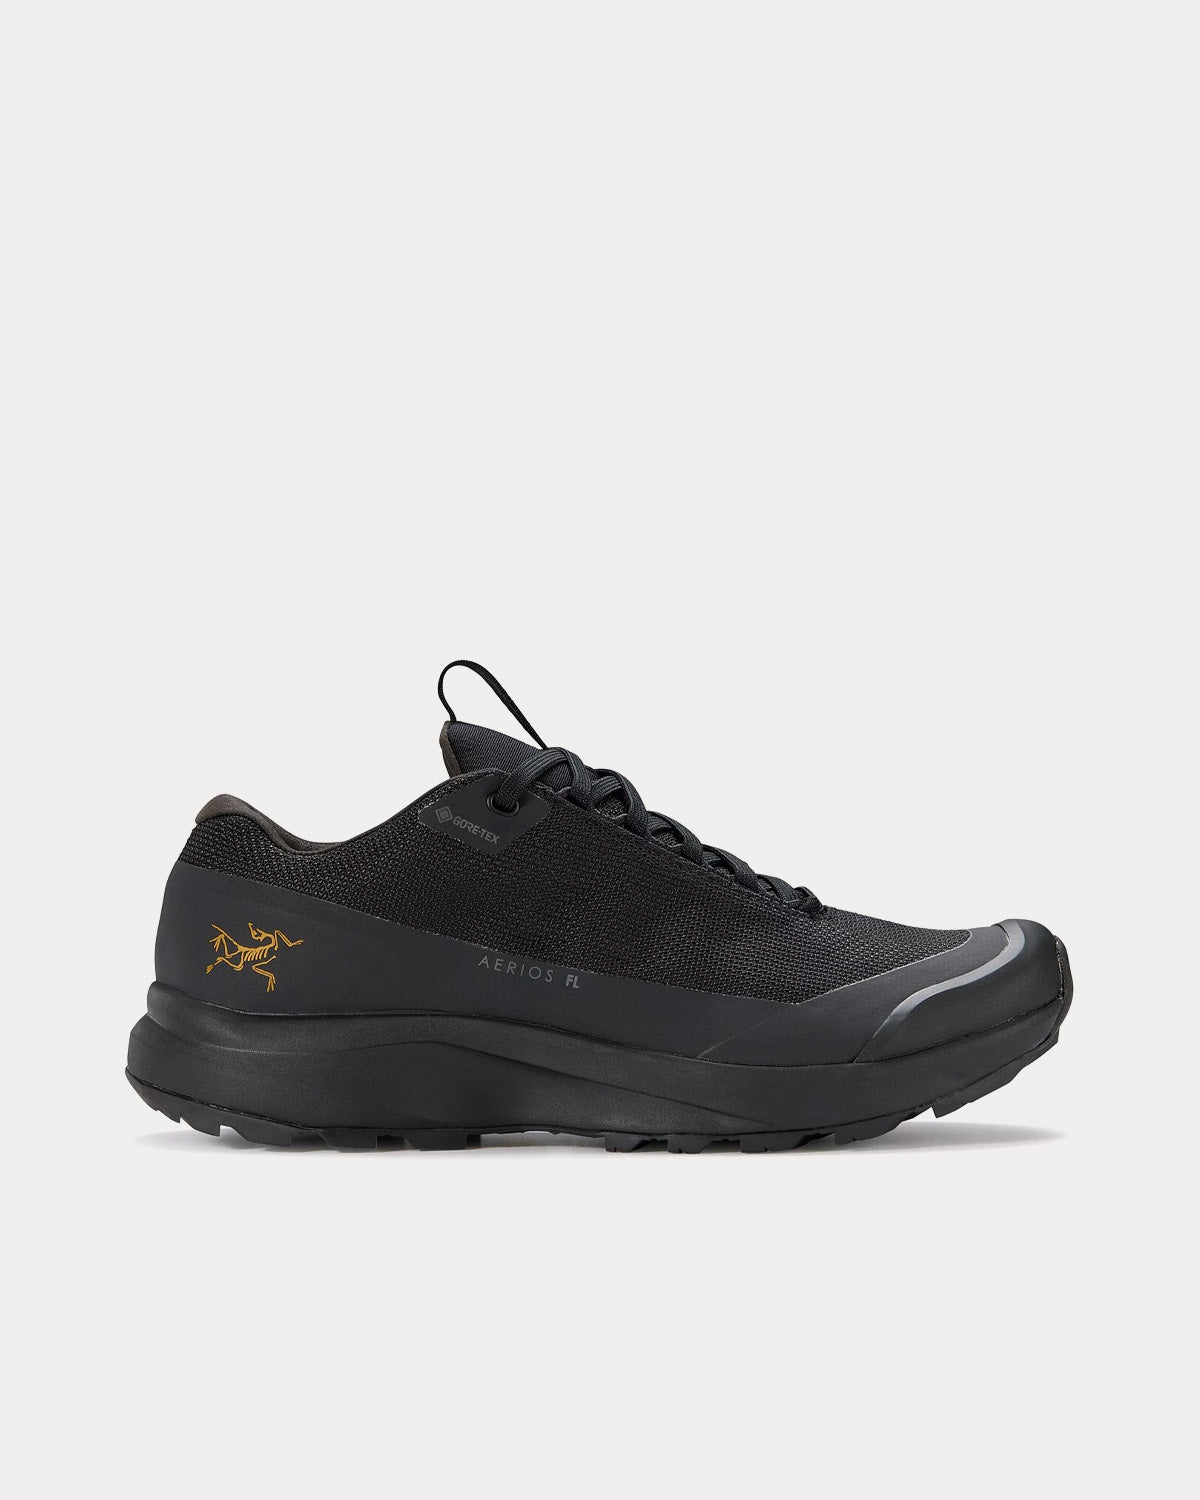 Arc'teryx - Aerios FL 2 GTX Black / Black Running Shoes